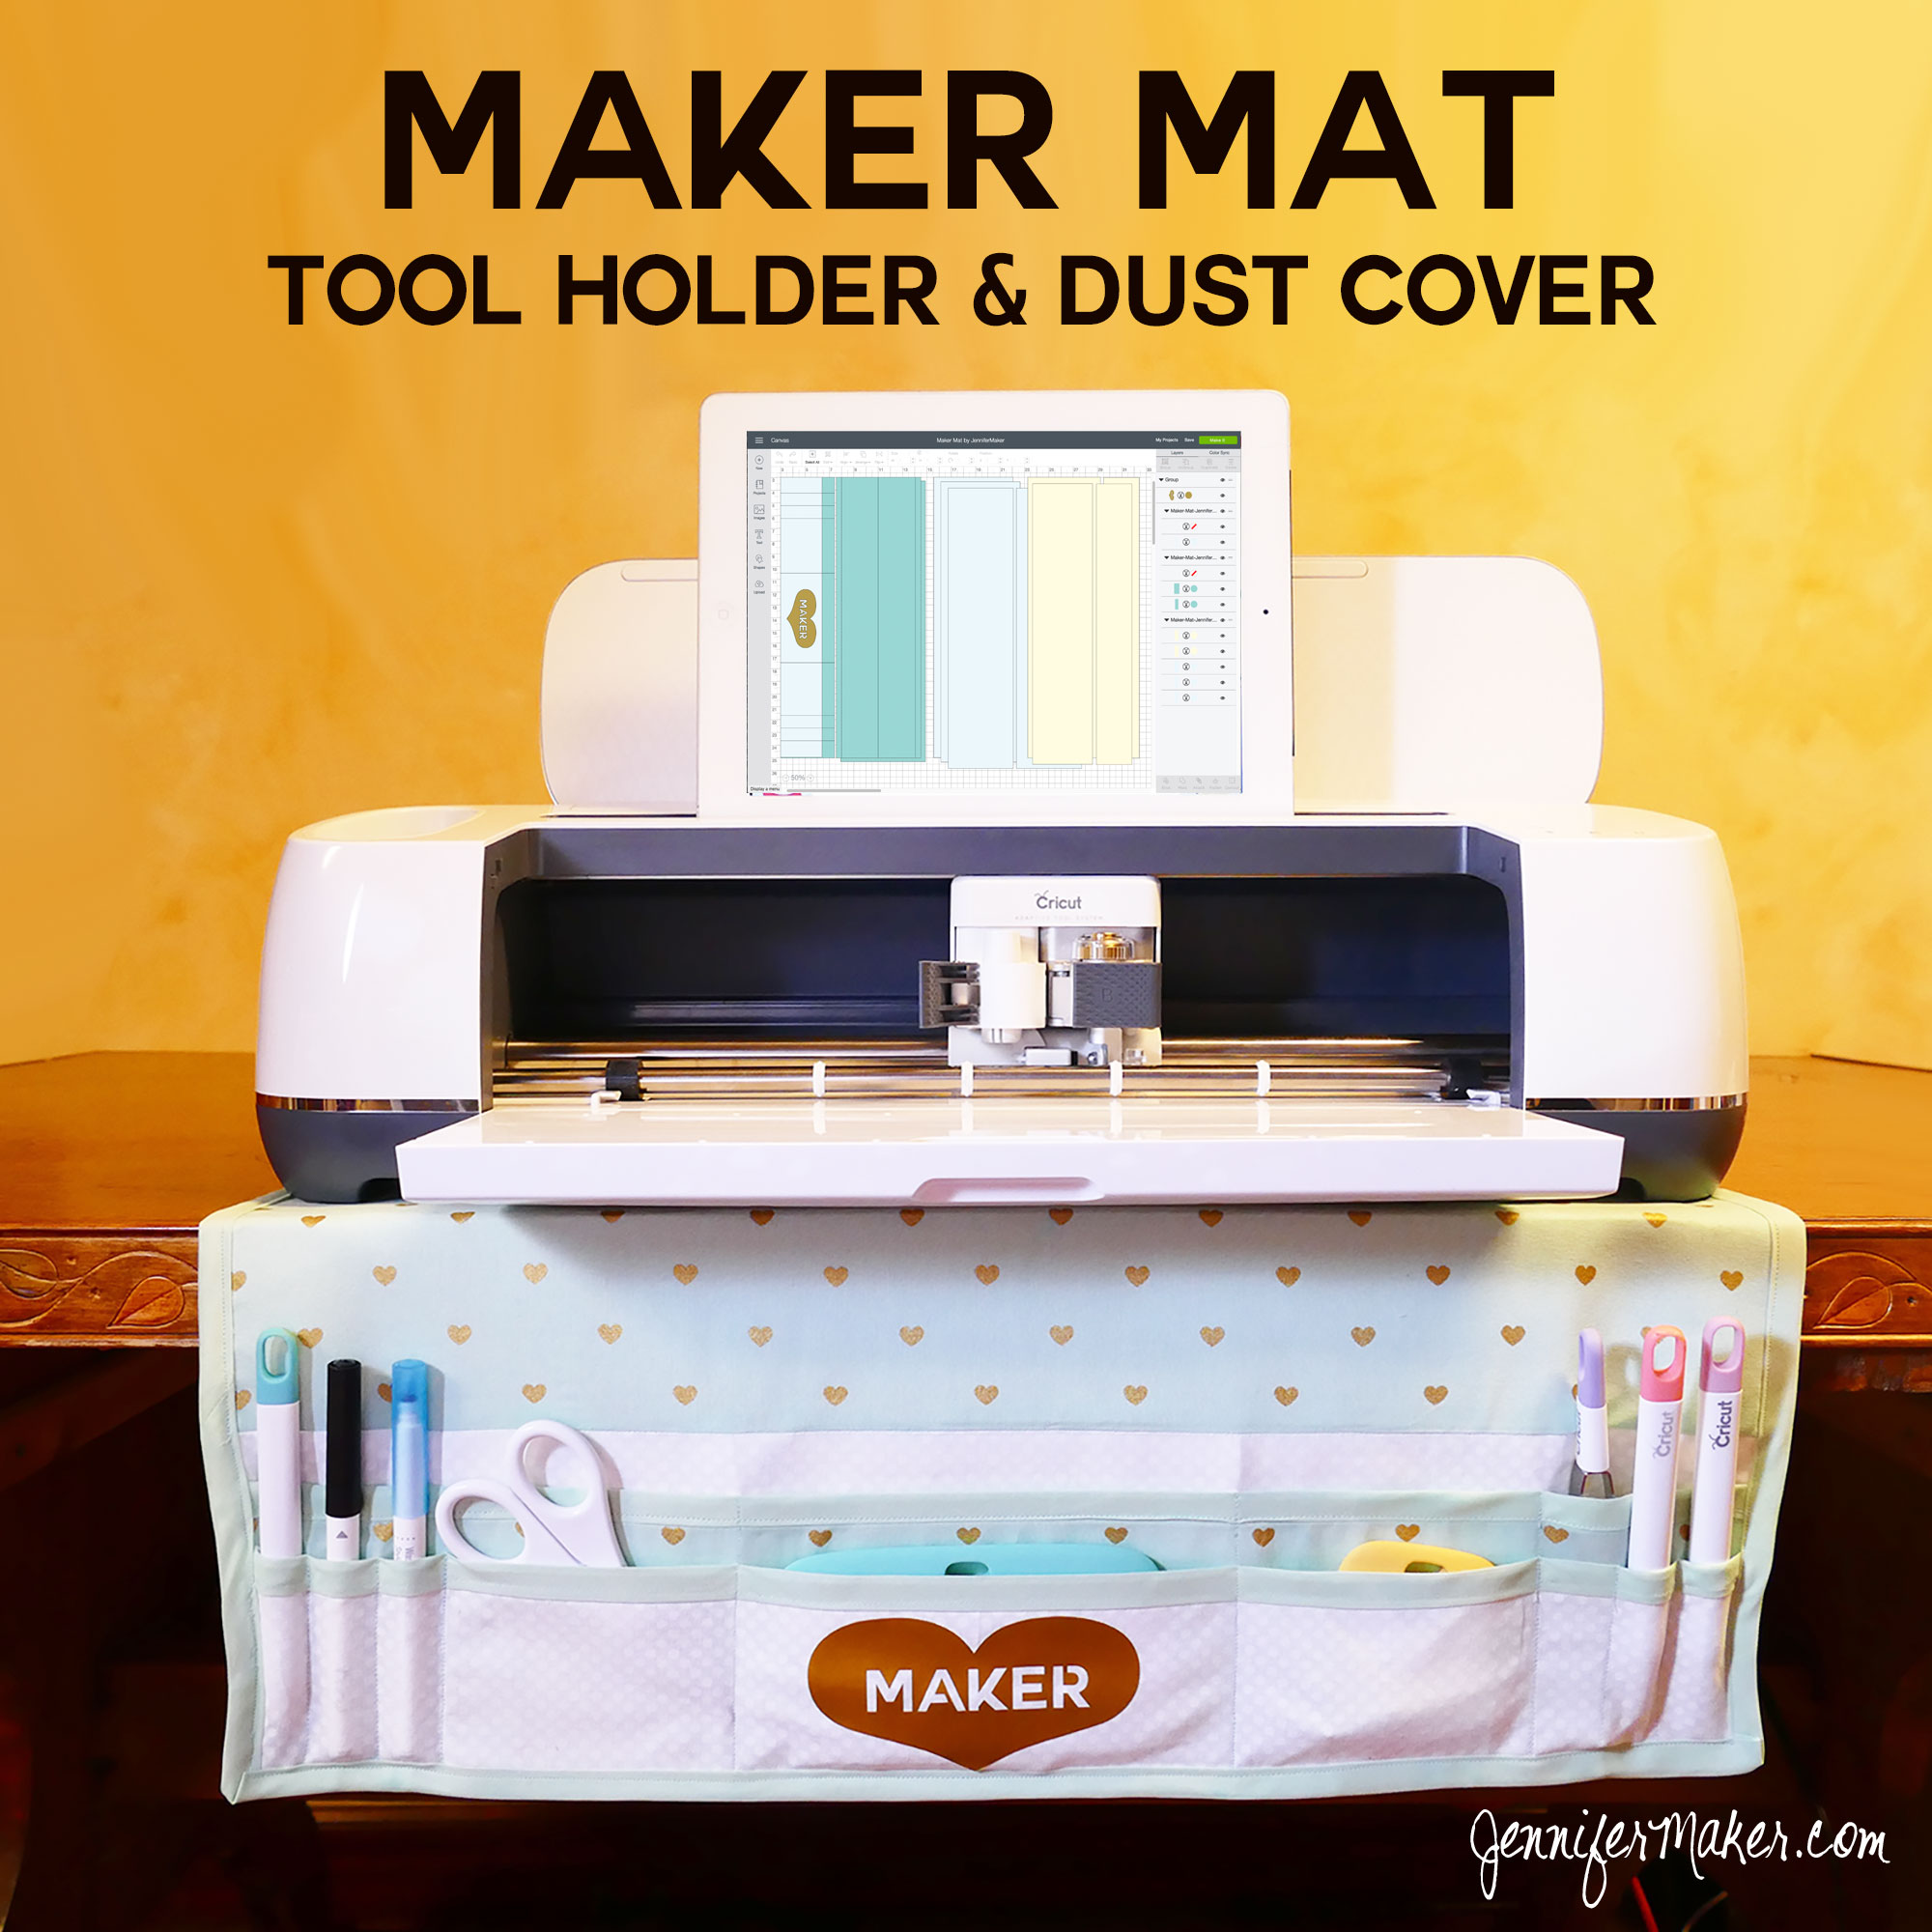 Maker Mat Tool Organizer & Dust Cover - Great Cricut Maker Projects